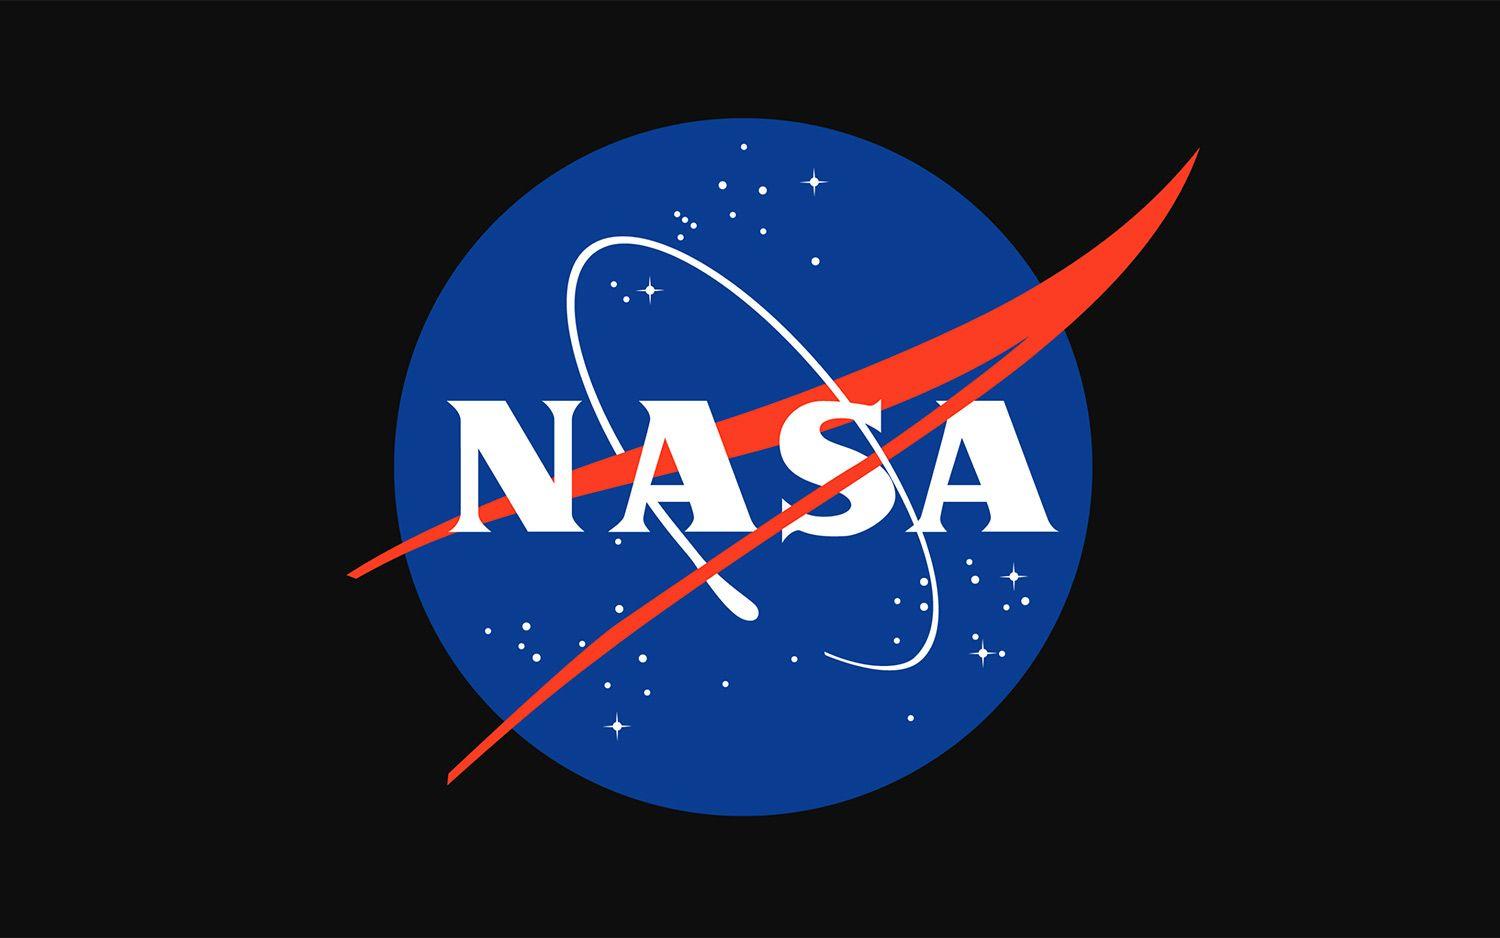 1960 NASA Logo - Why NASA Needs a New Logo